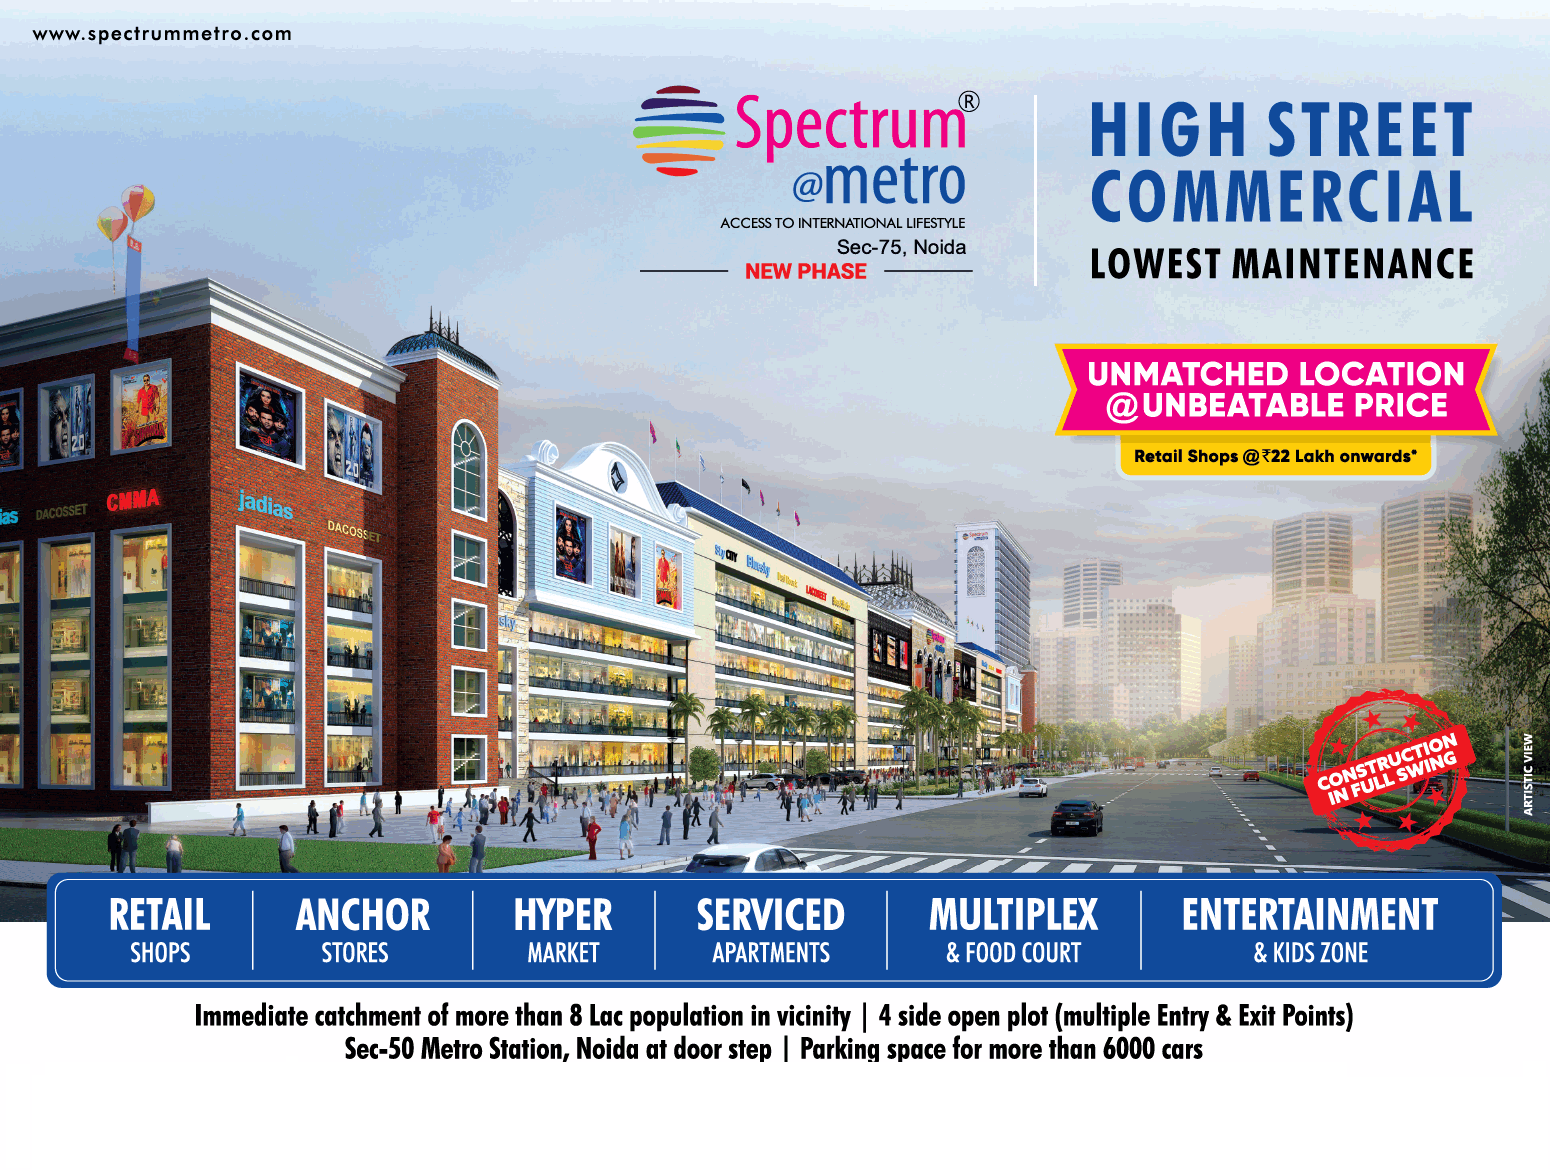 High street commercial investment in Spectrum Metro in Noida Update